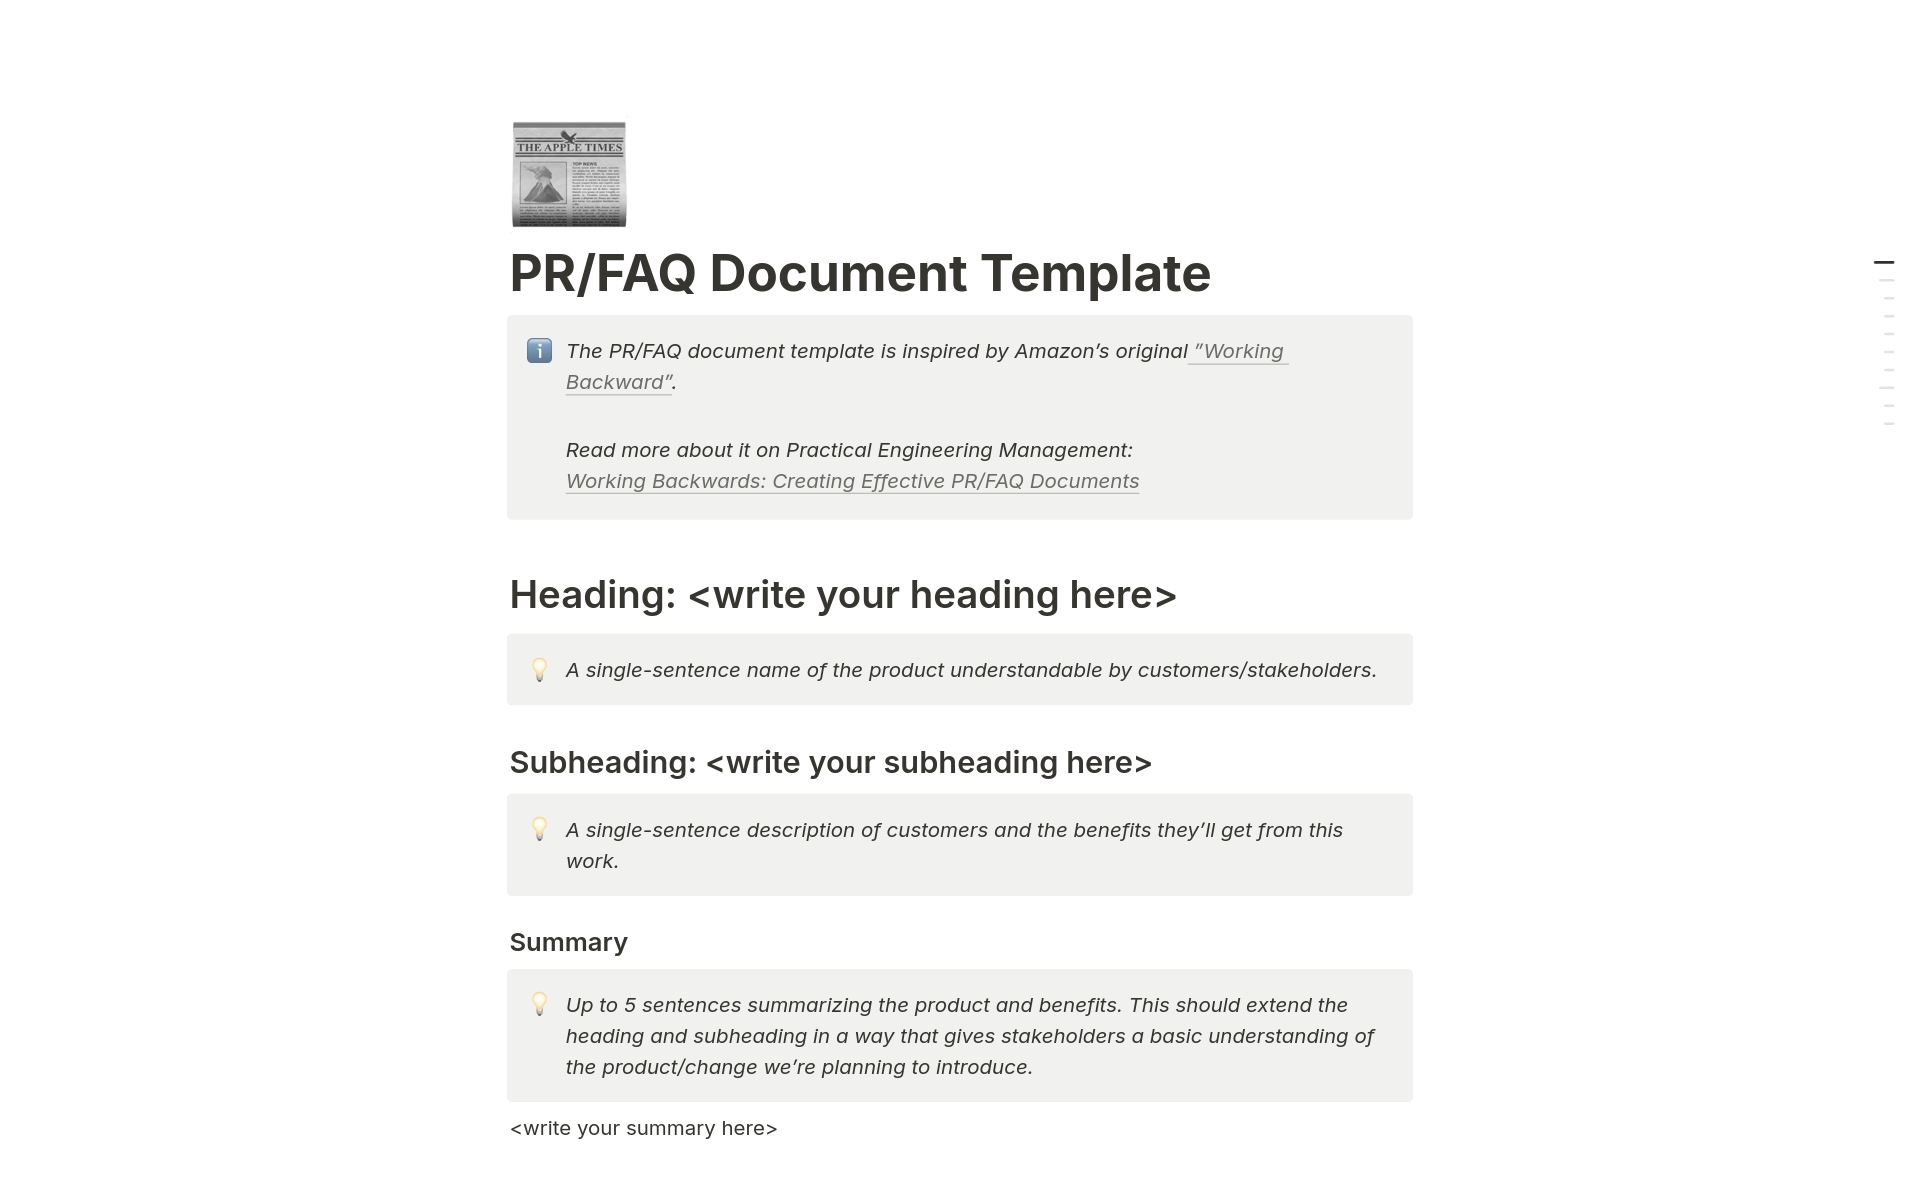 Template for writing PR/FAQ document